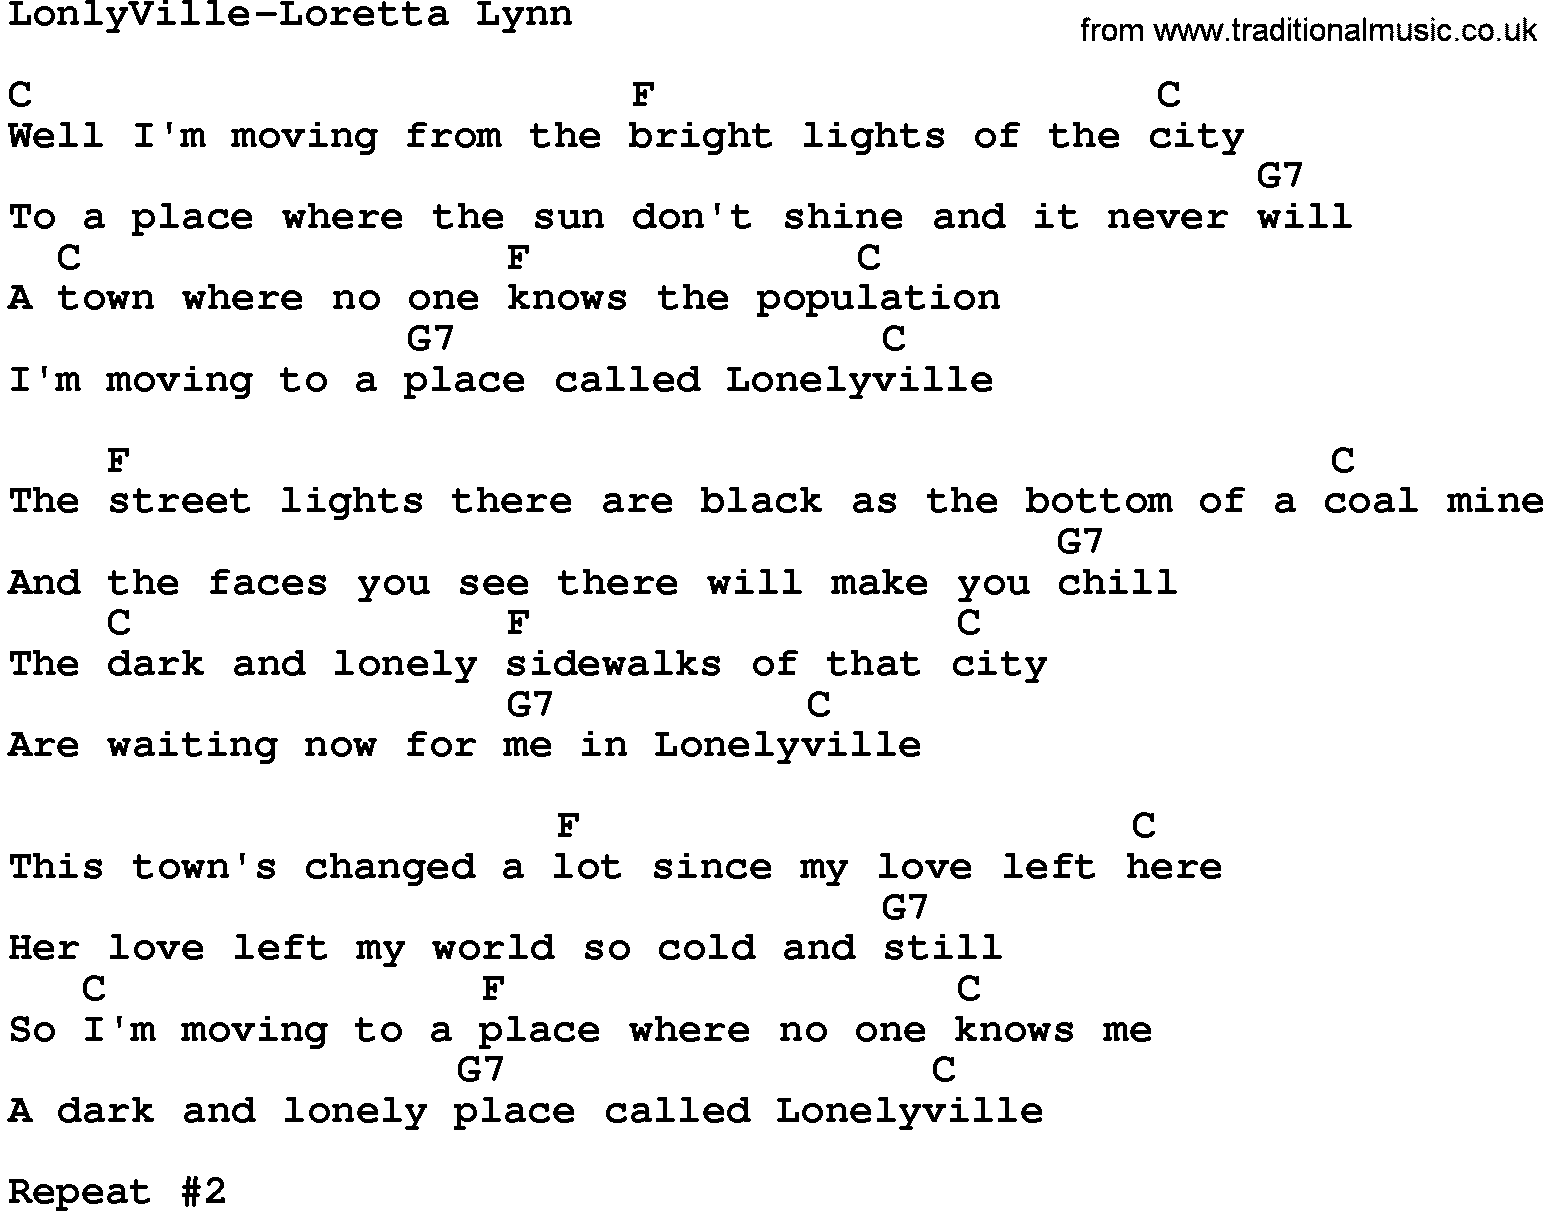 Country music song: Lonlyville-Loretta Lynn lyrics and chords